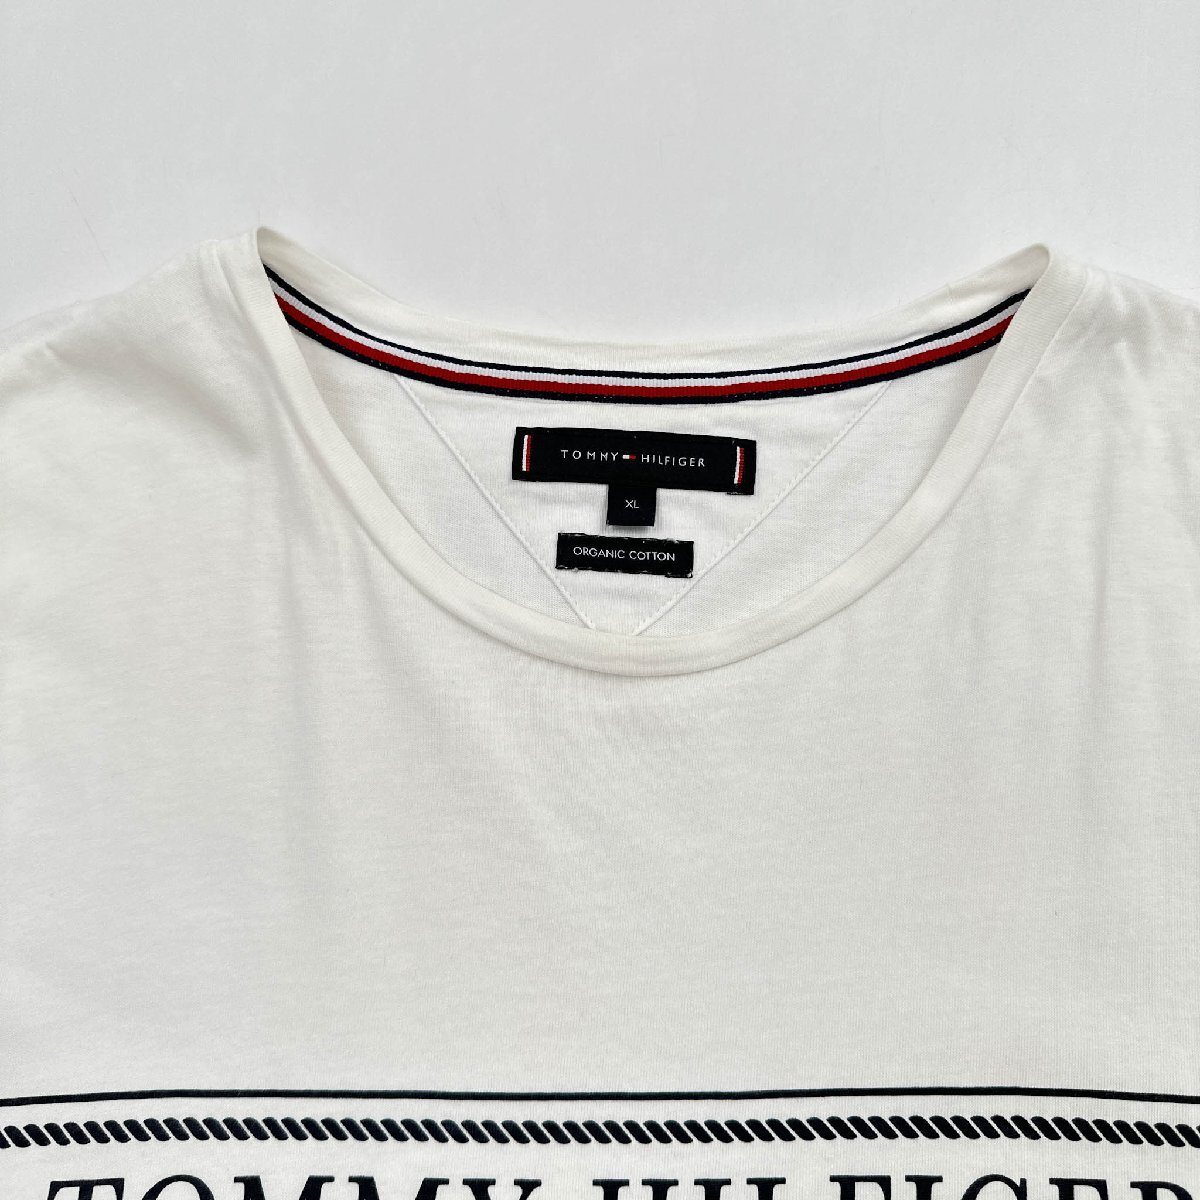 TOMMY HILFIGER トミーヒルフィガー ロゴプリント 半袖Tシャツ カットソー XLサイズ/白/ホワイト/メンズ/オーガニックコットンの画像3